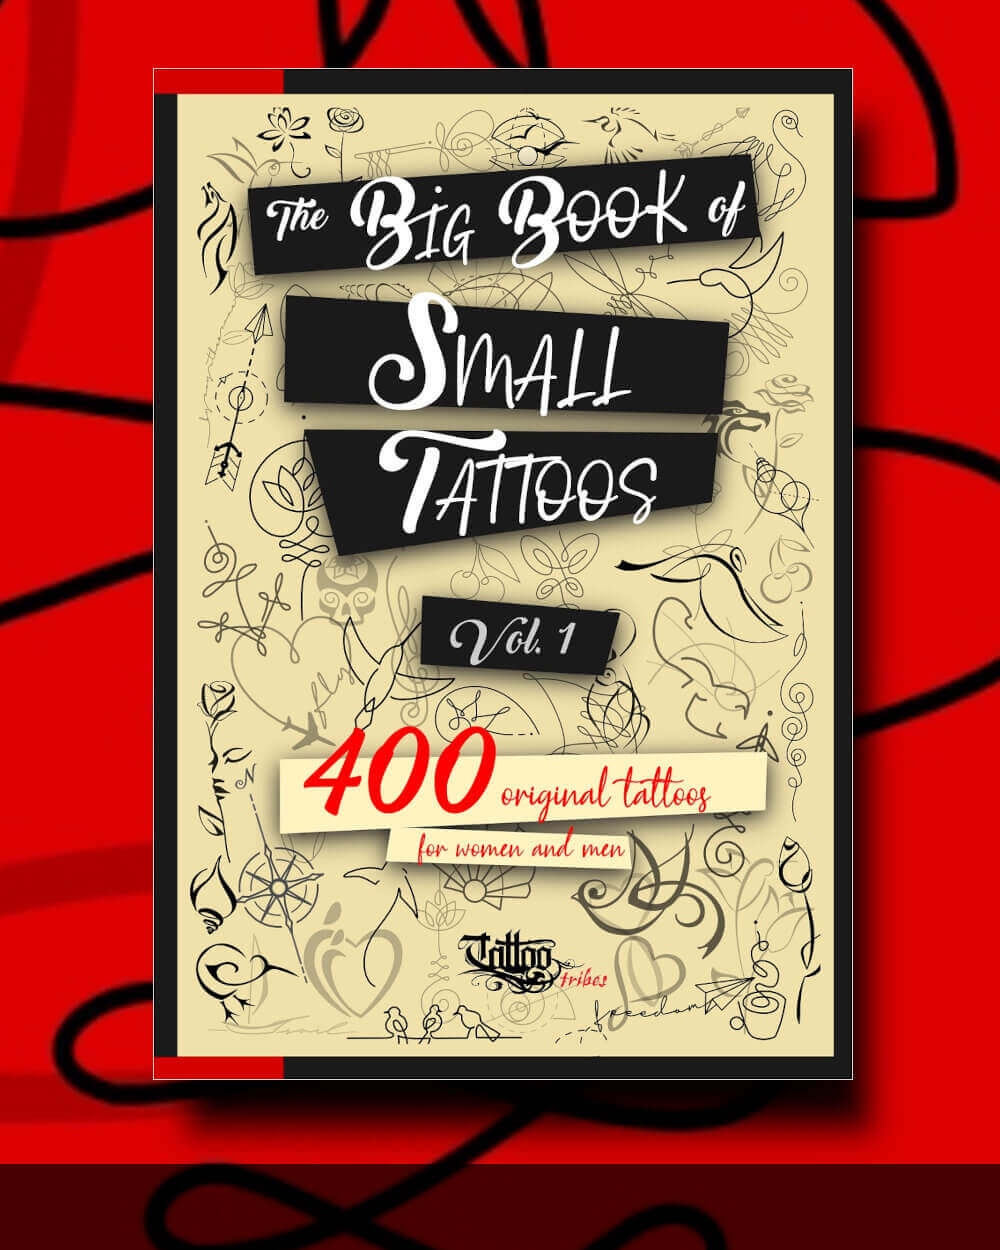 The Big Book of Small Tattoos vol.1: mixed small tattoos